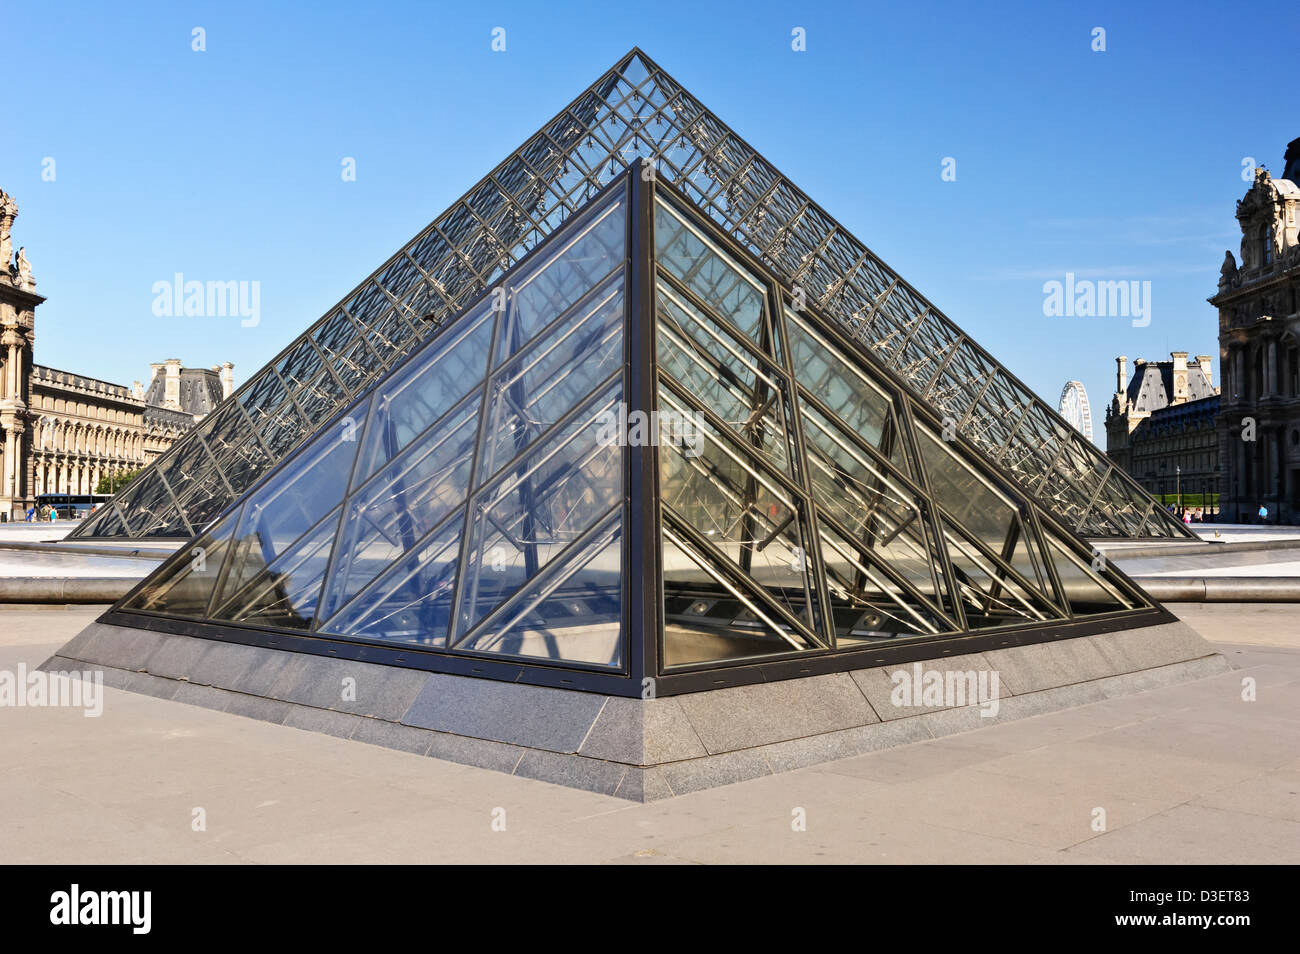 Glas Pyramide im Louvre Museum in Paris, Frankreich Stockfotografie - Alamy